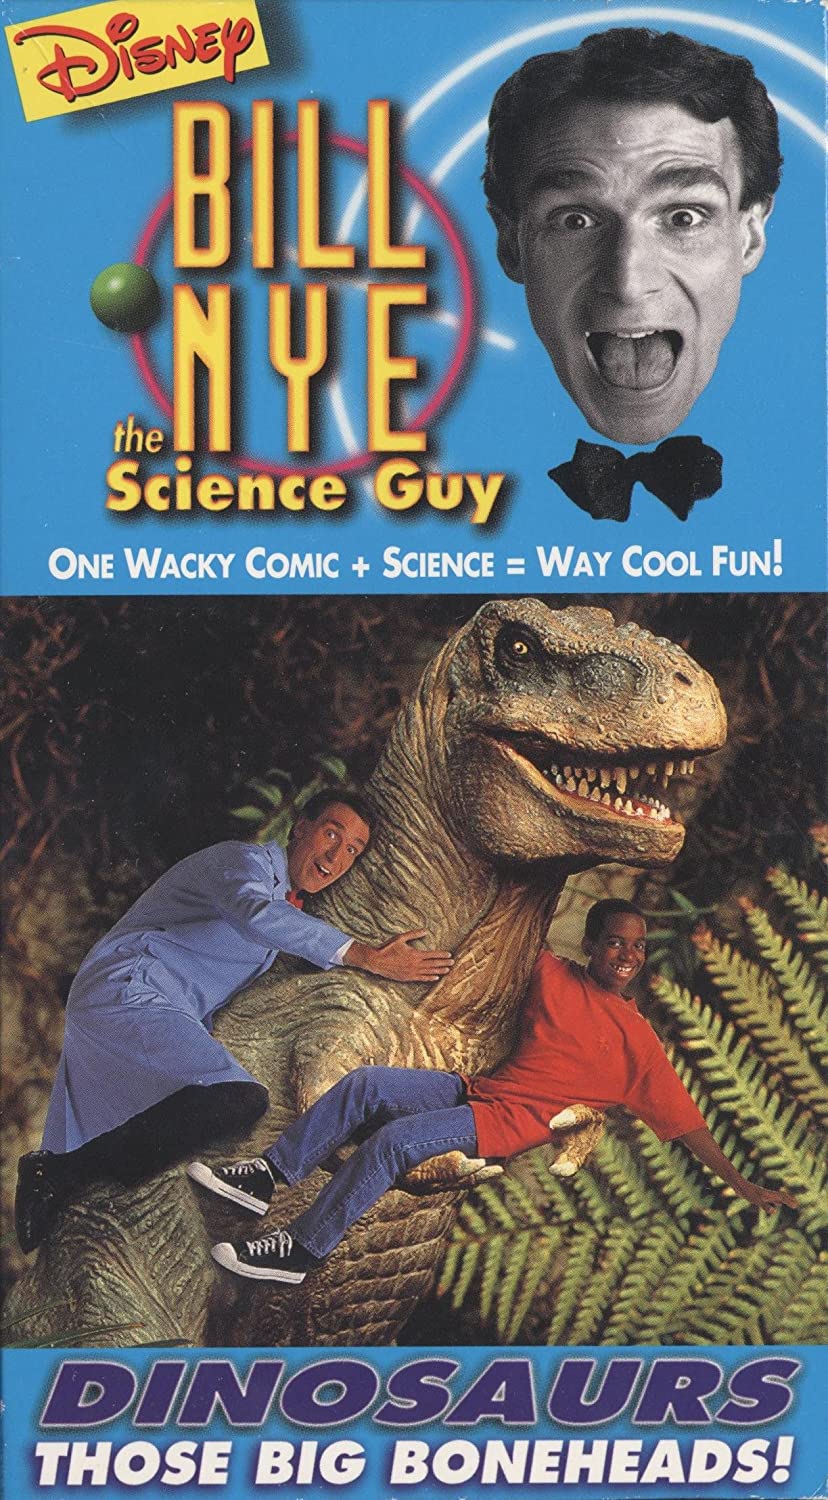 Bill Nye the Science Guy: Dinosaurs [DVD]